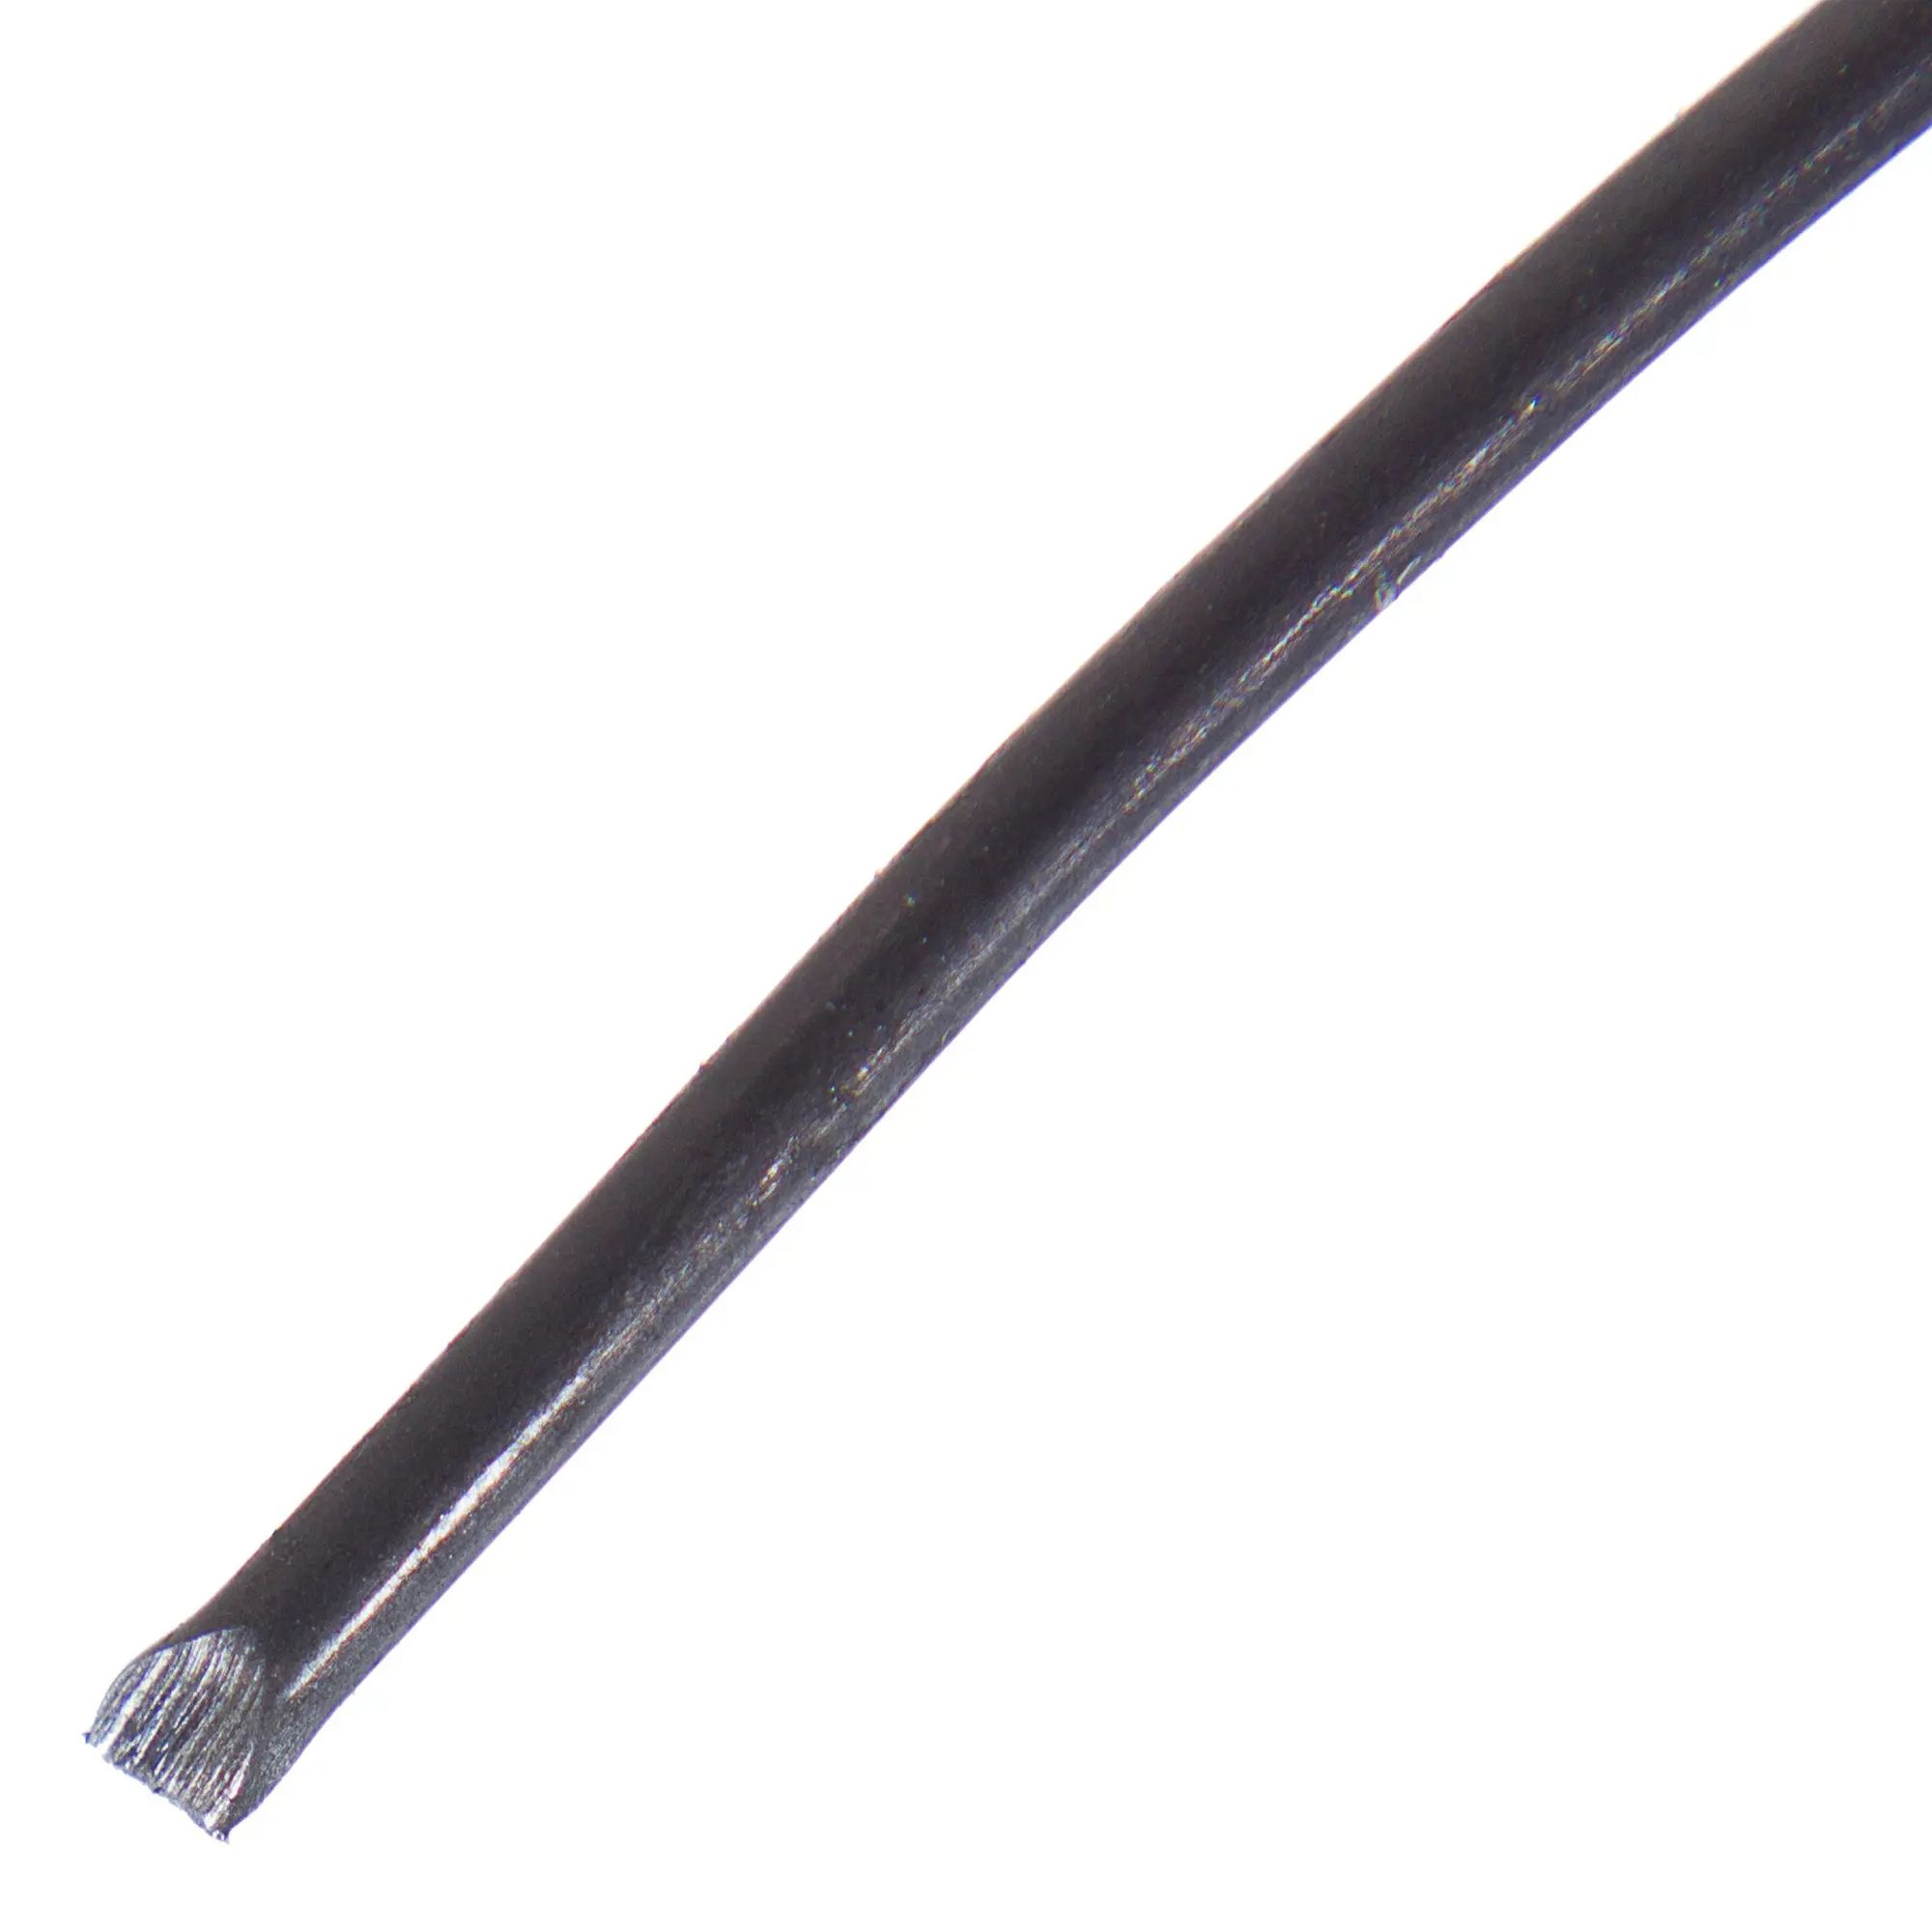 Вязальная проволока КРЕПКО-НАКРЕПКО, 47921, 1,2 мм, клубок, 200 г вязальная проволока крепко накрепко